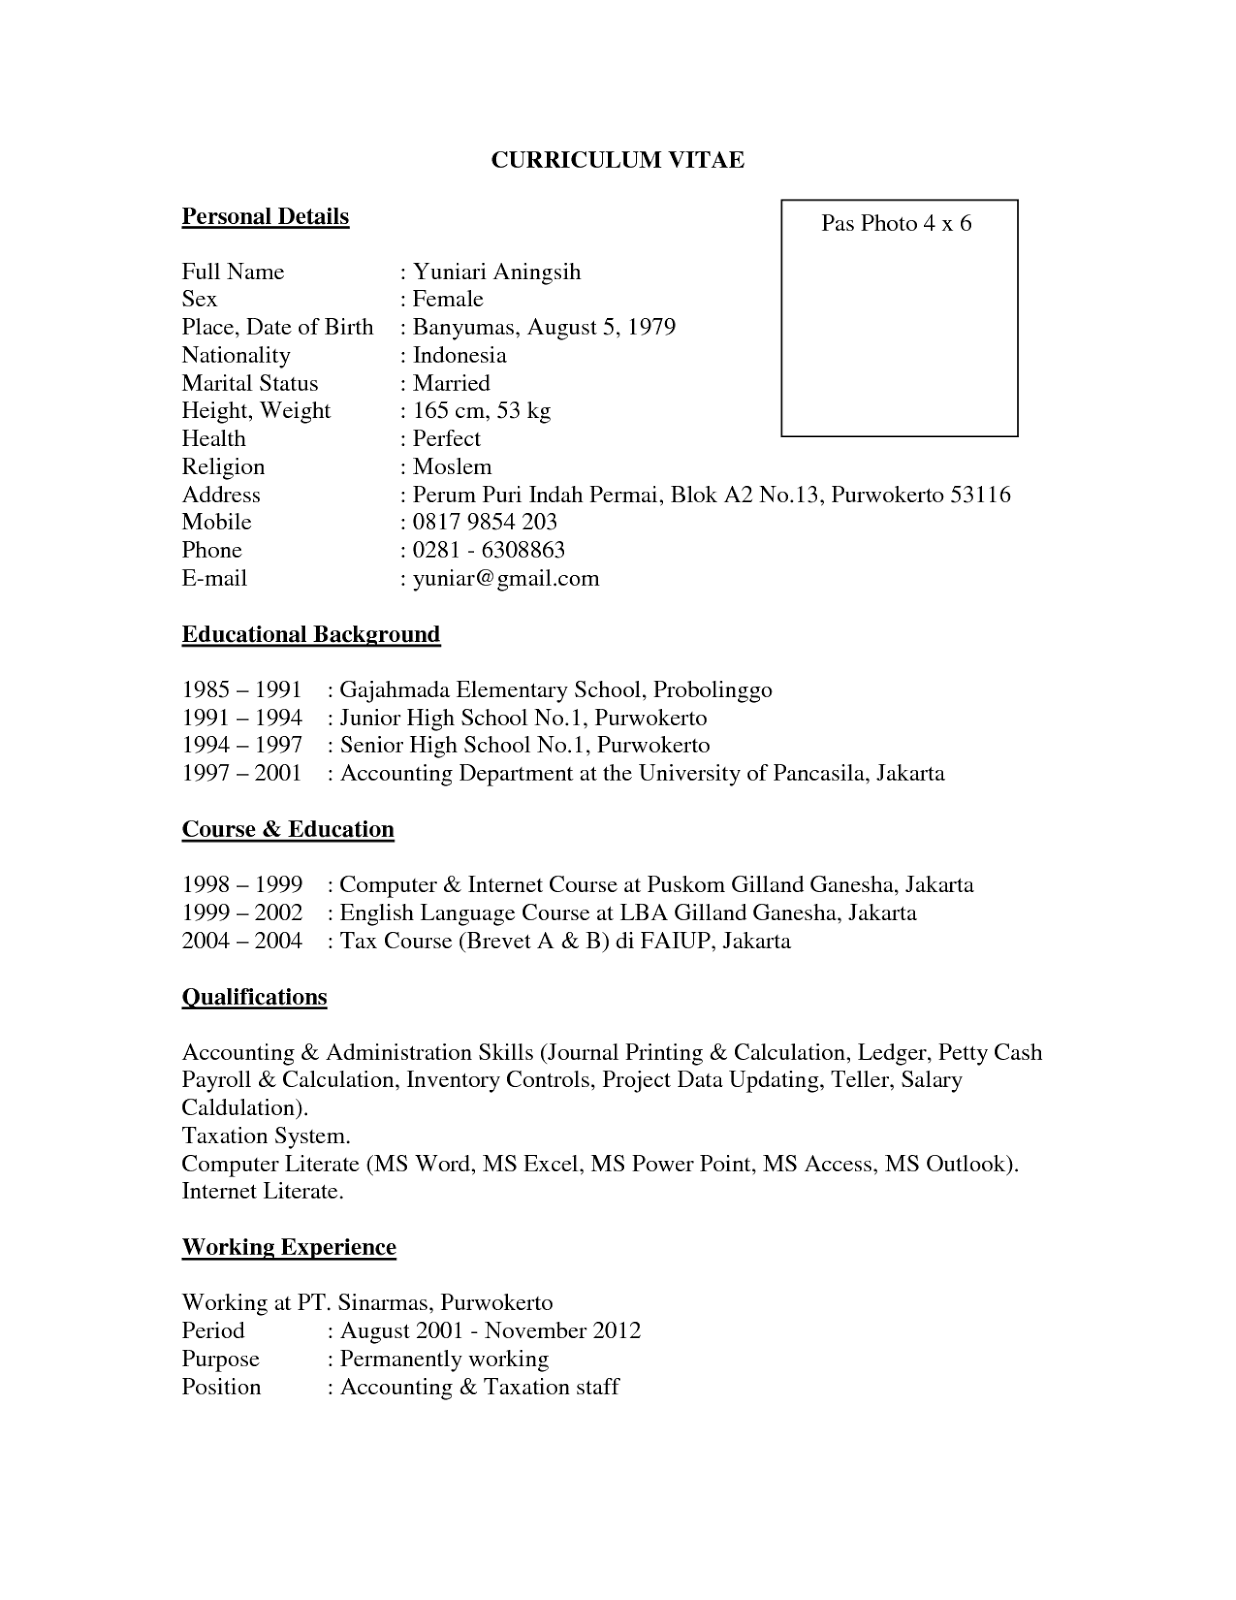 Contoh CV format Bahasa Inggris - Poztmo™ Media - HD Wallpapers